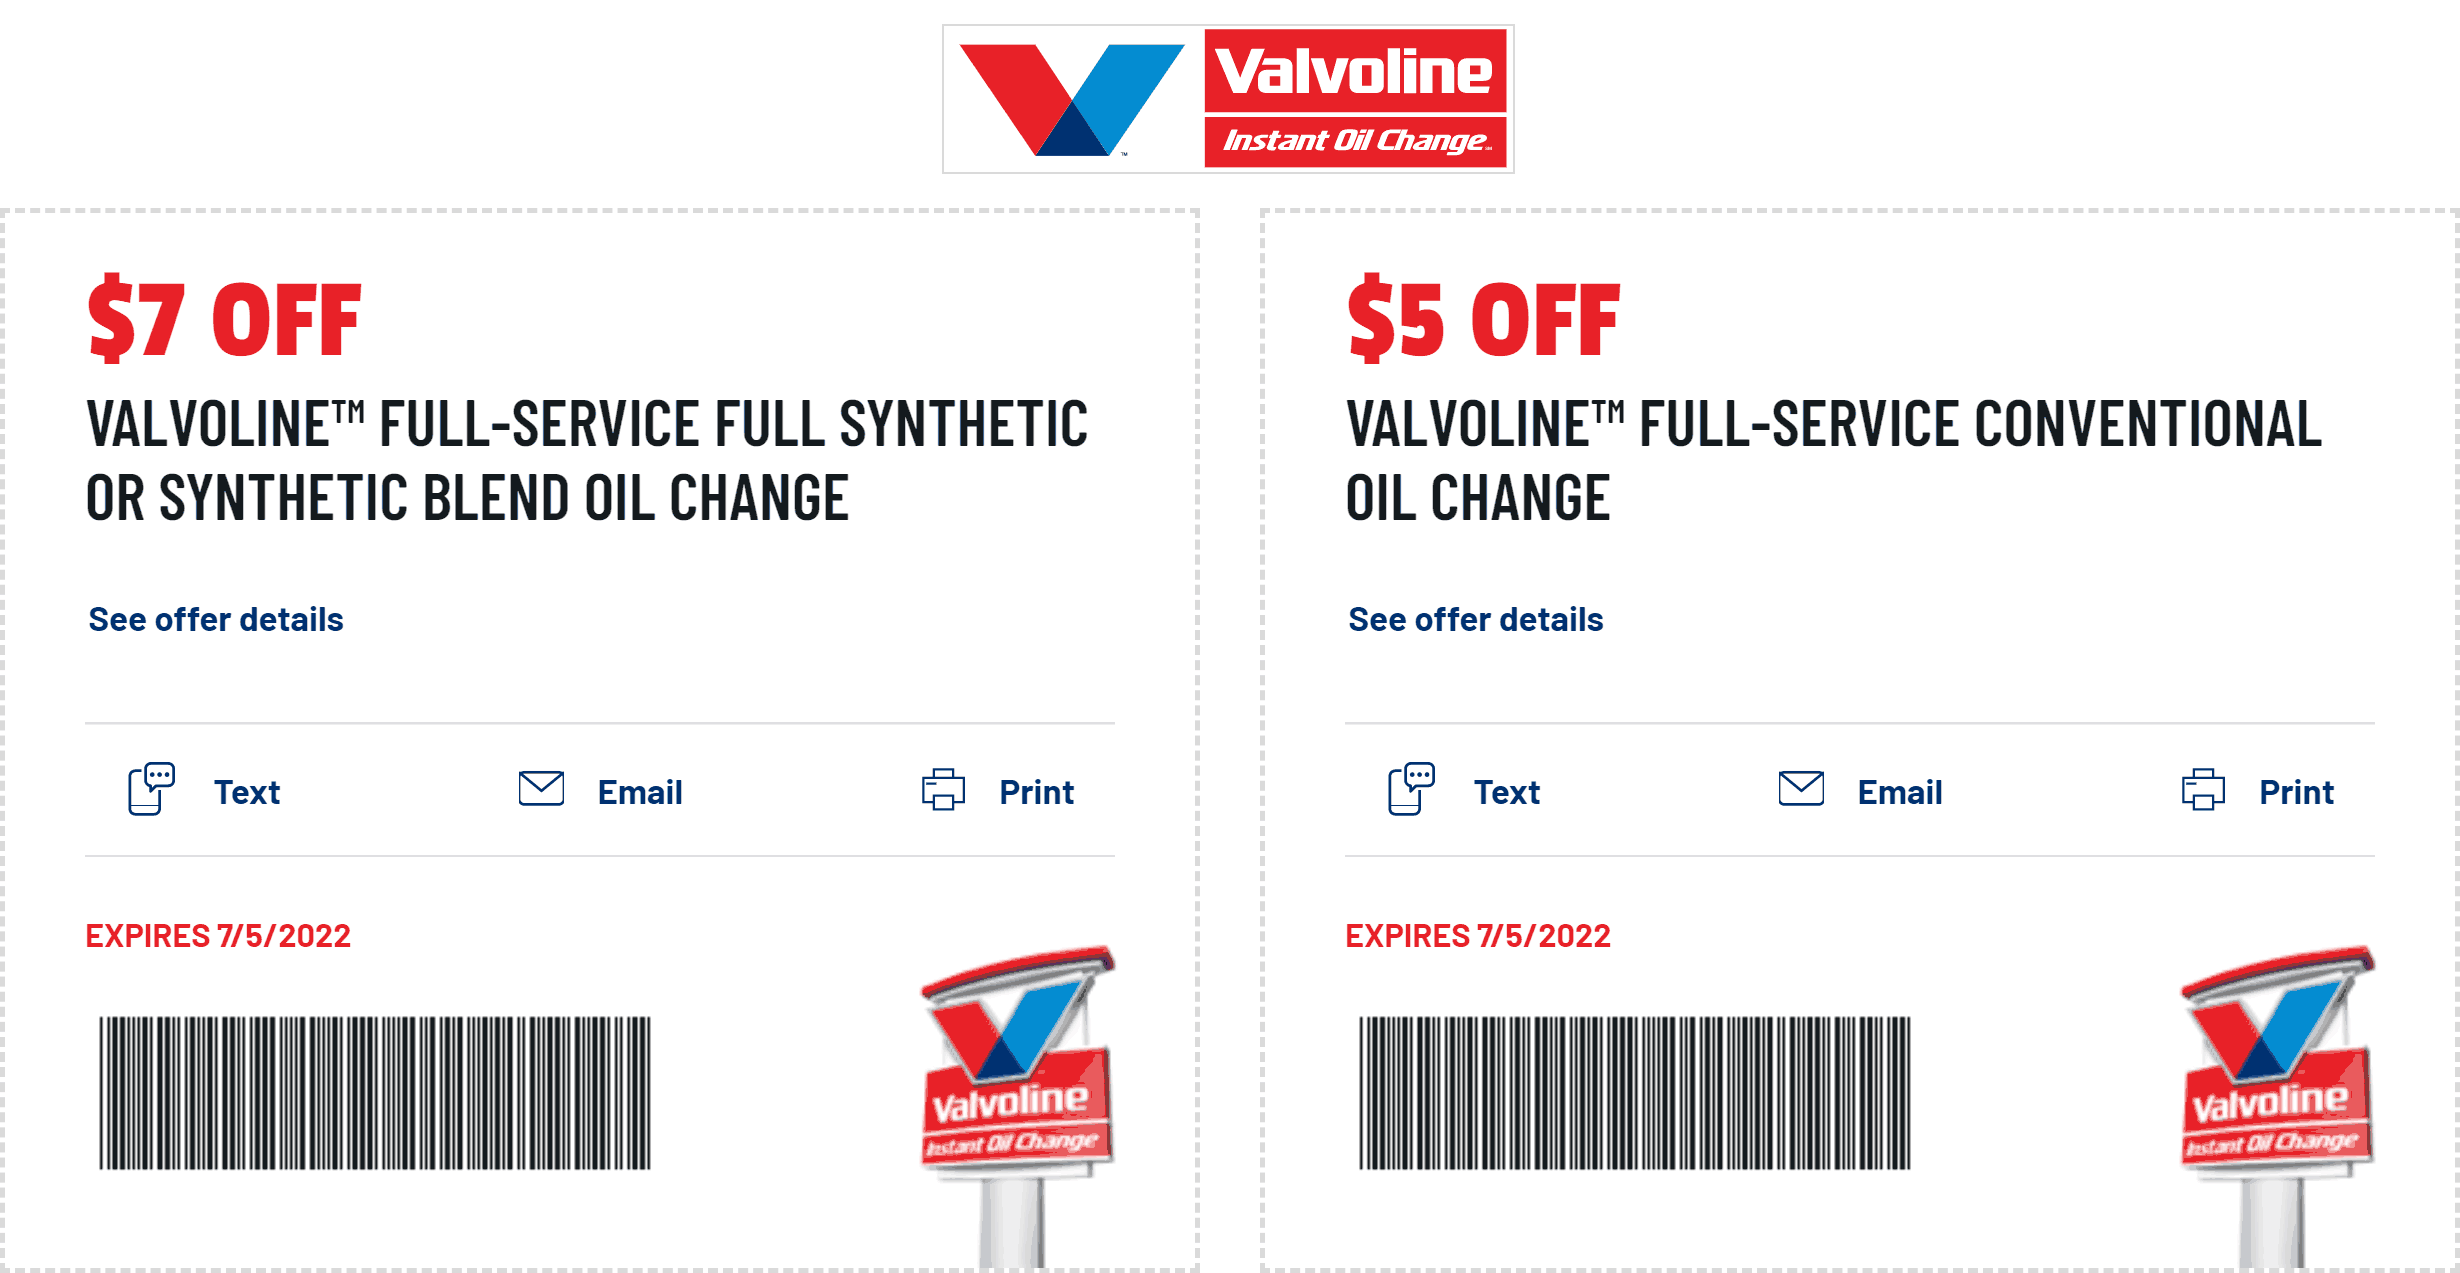 Valvoline stores Coupon  $5-$7 off an oil change at Valvoline #valvoline 